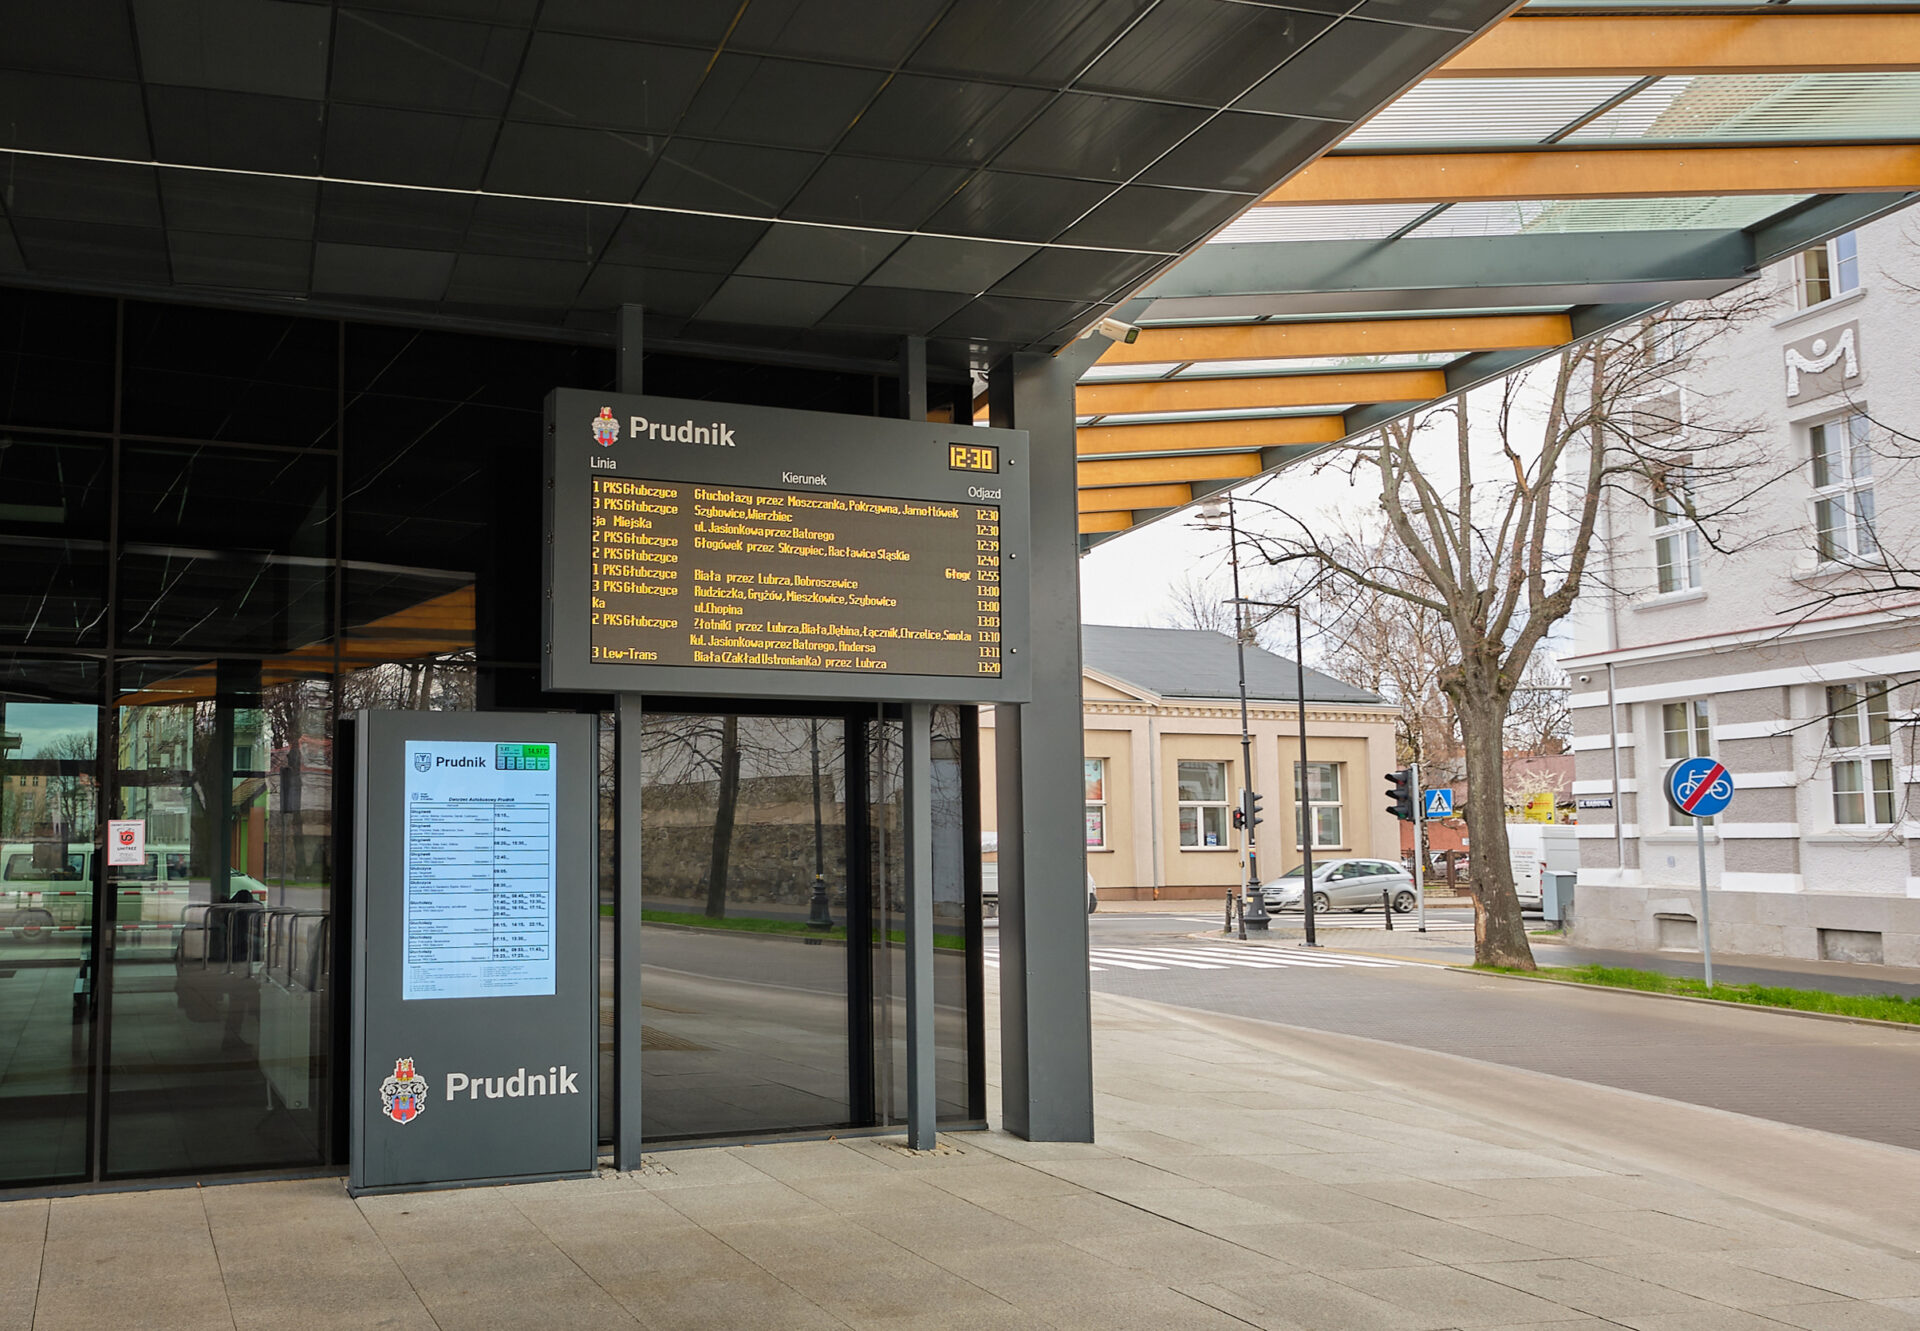 LED Passenger Information Display I construction of the bus station in Prudnik